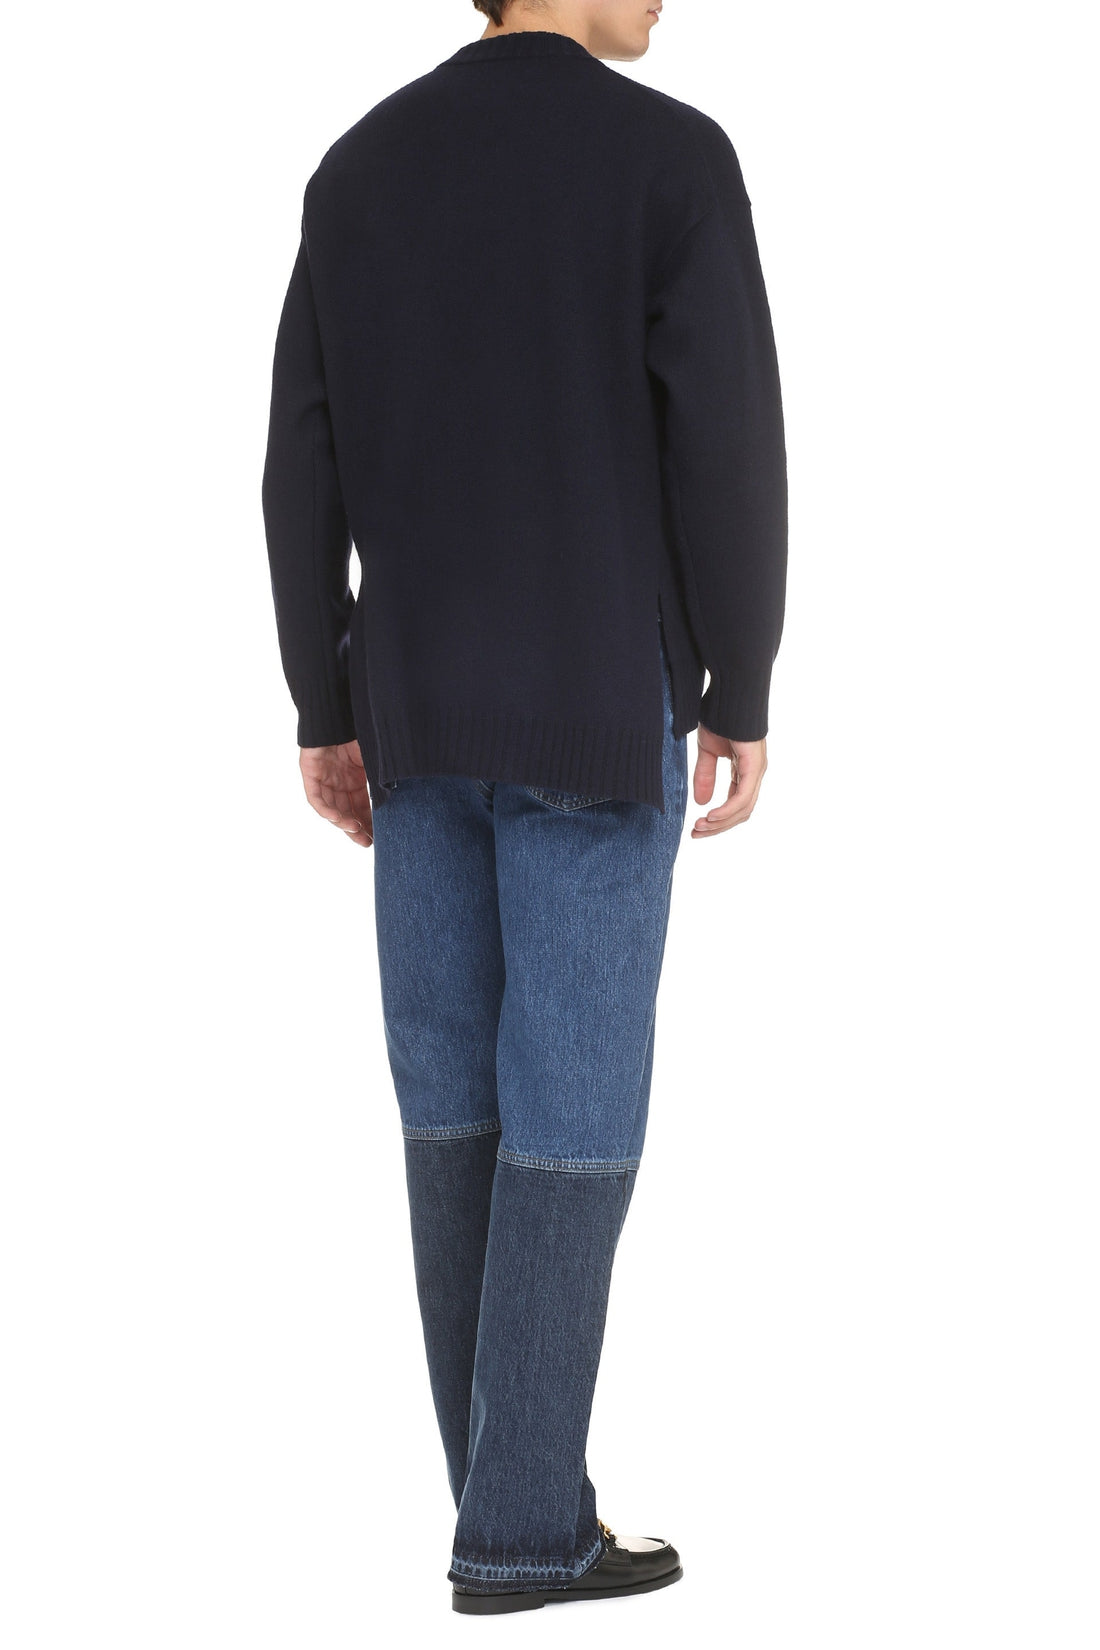 Jil Sander-OUTLET-SALE-Long sleeve crew-neck sweater-ARCHIVIST